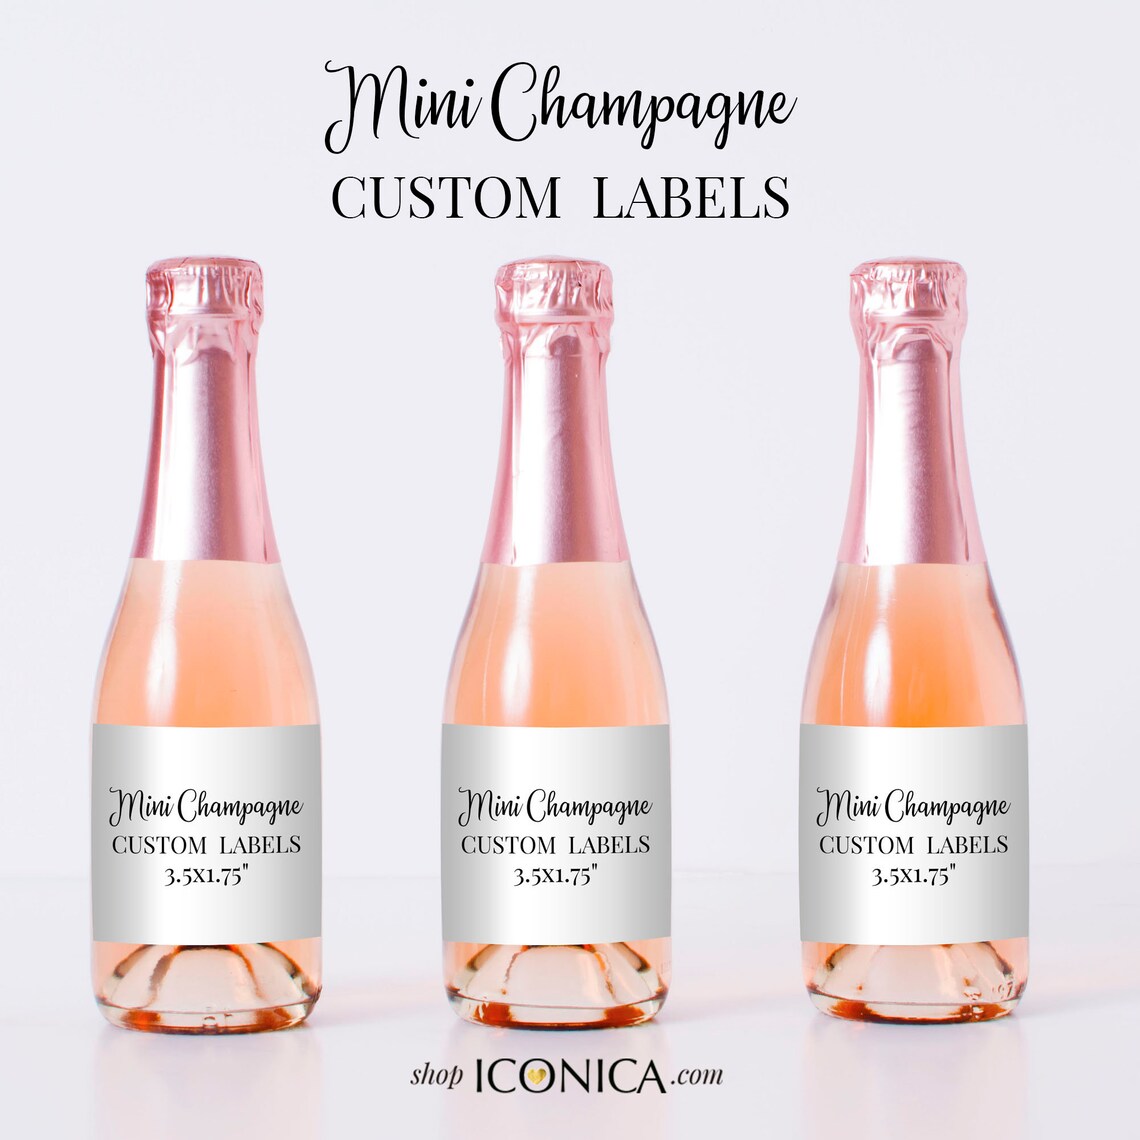 personalized mini wine bottle labels